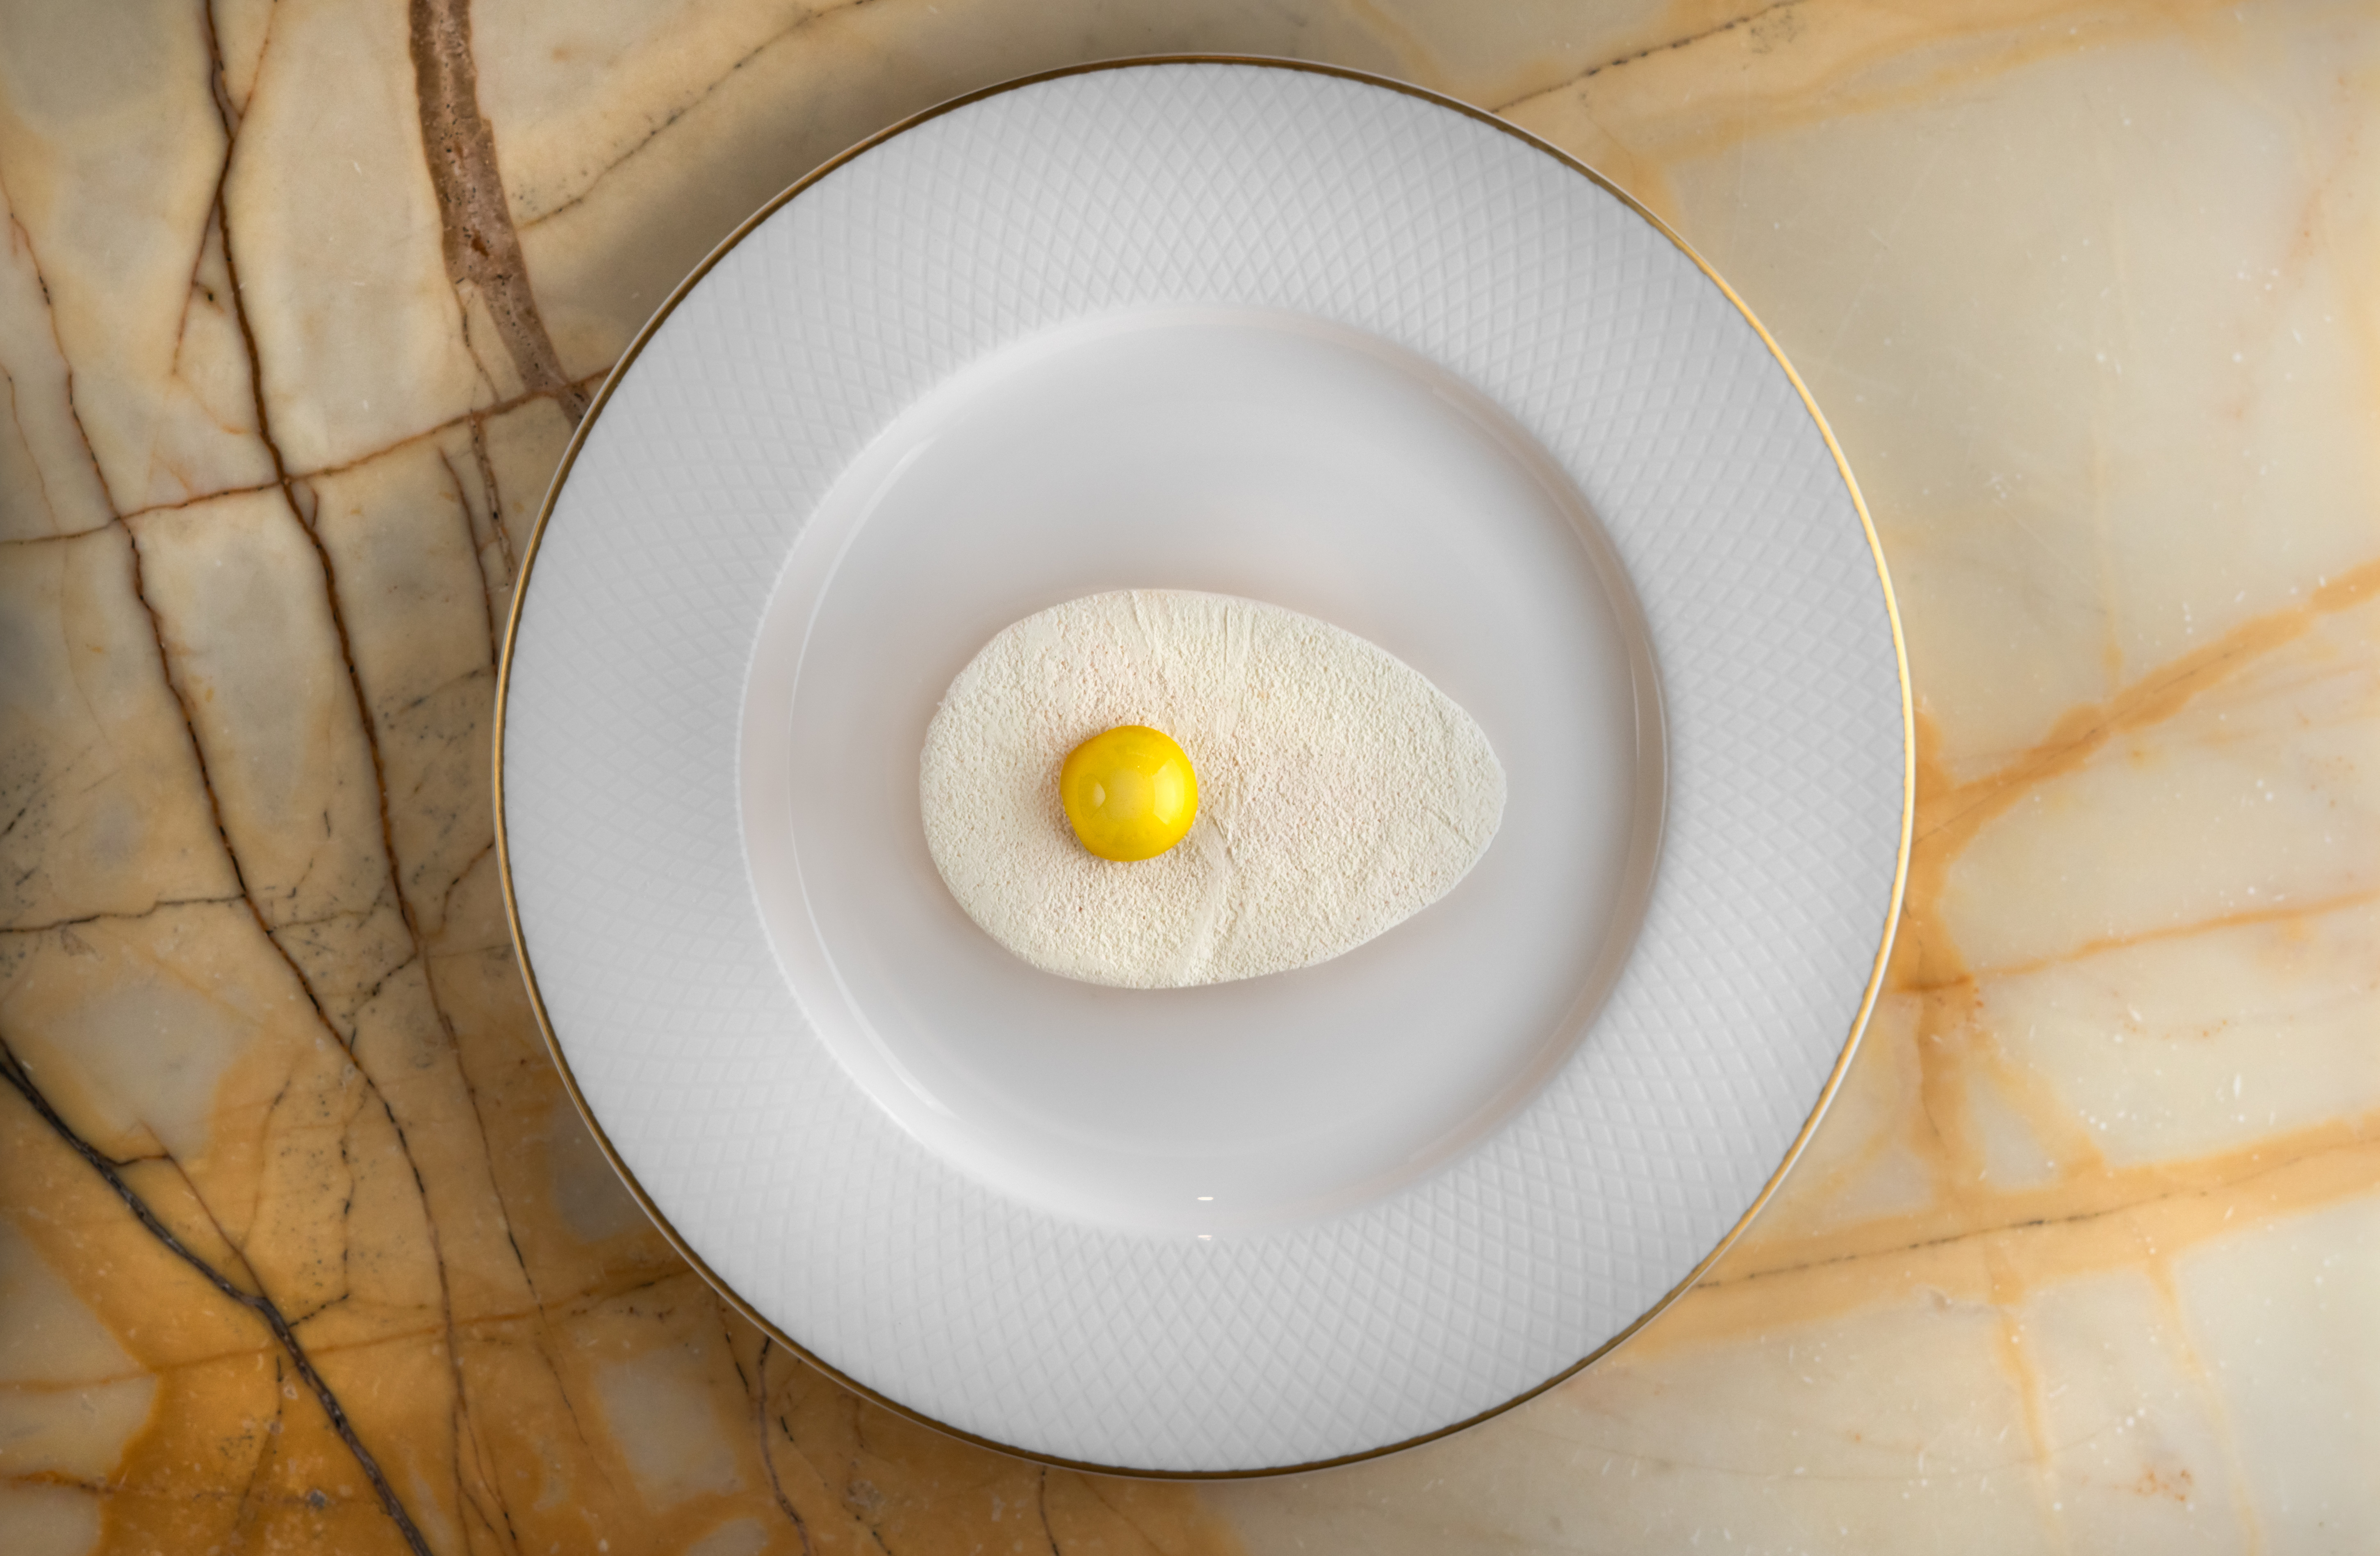 Hotel Café Royal Easter meringue shaped like a fried egg